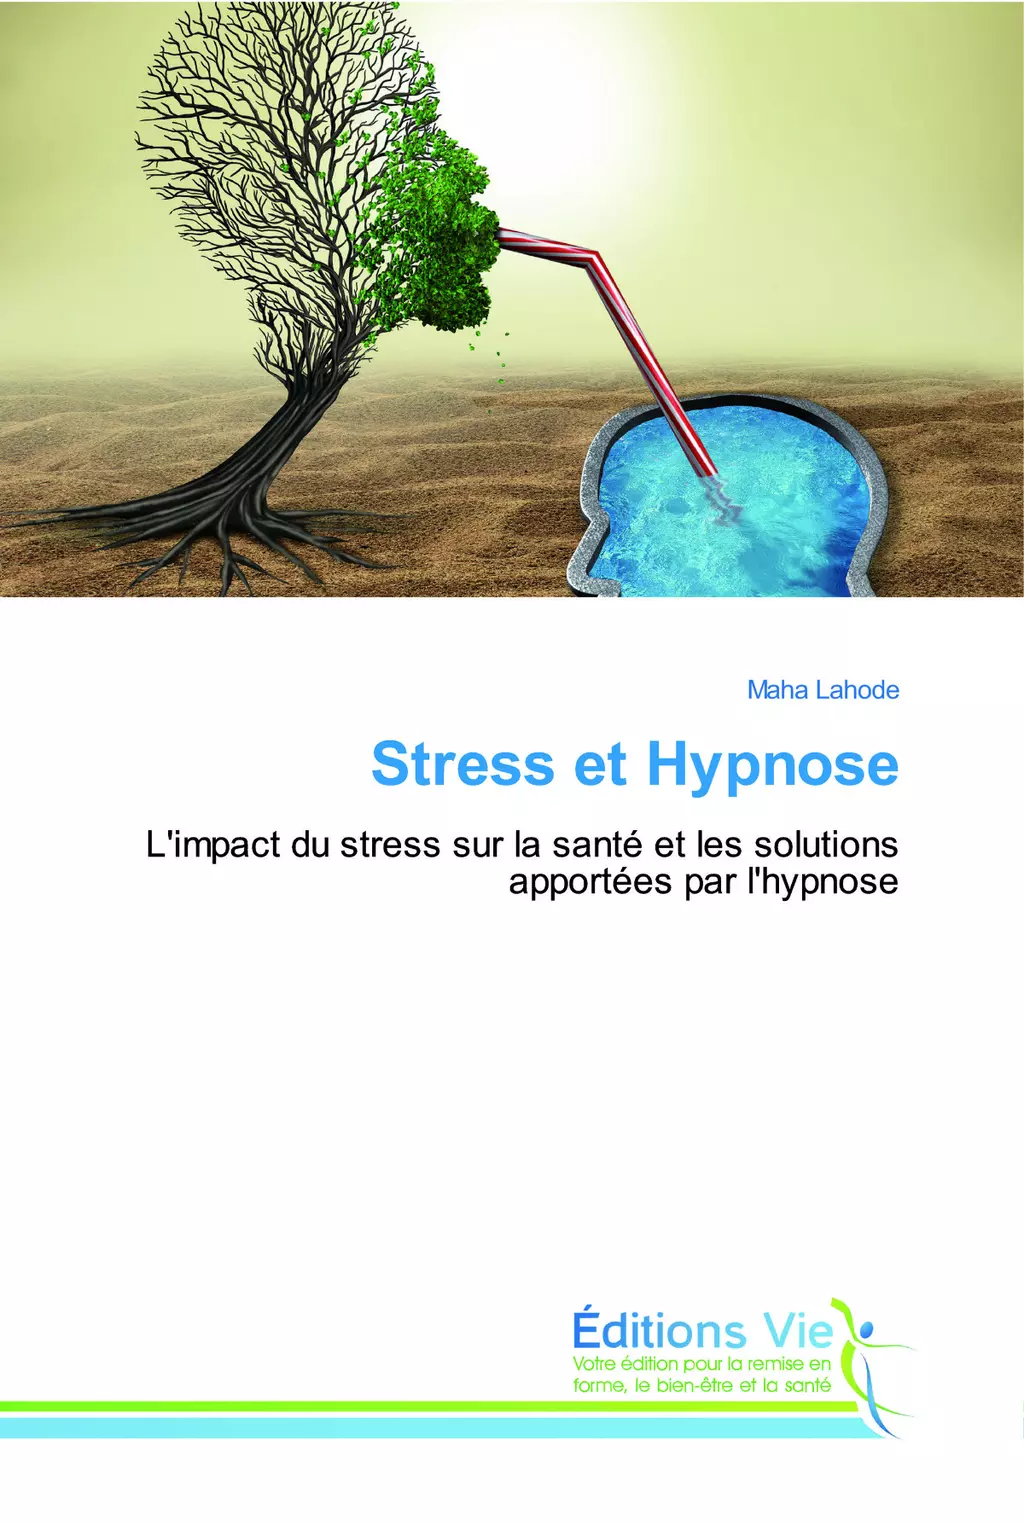 Stress et Hypnose - Maha Lahode